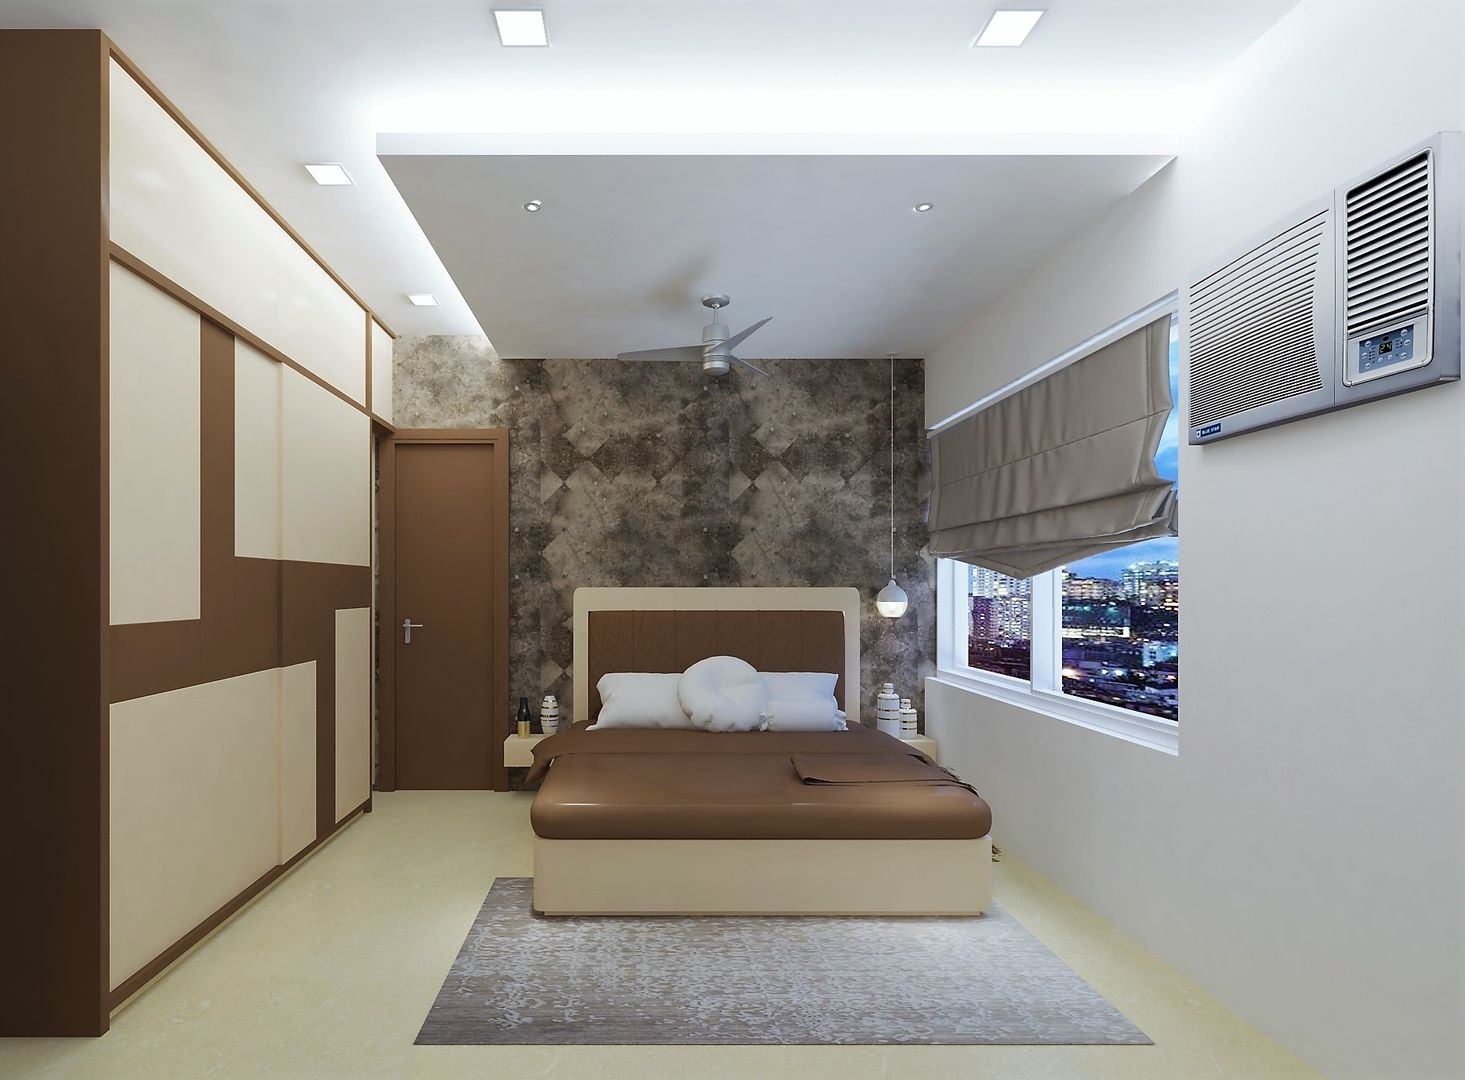 Bedroom Design Ideas, Golden Spiral Productionz (p) ltd Golden Spiral Productionz (p) ltd غرفة نوم